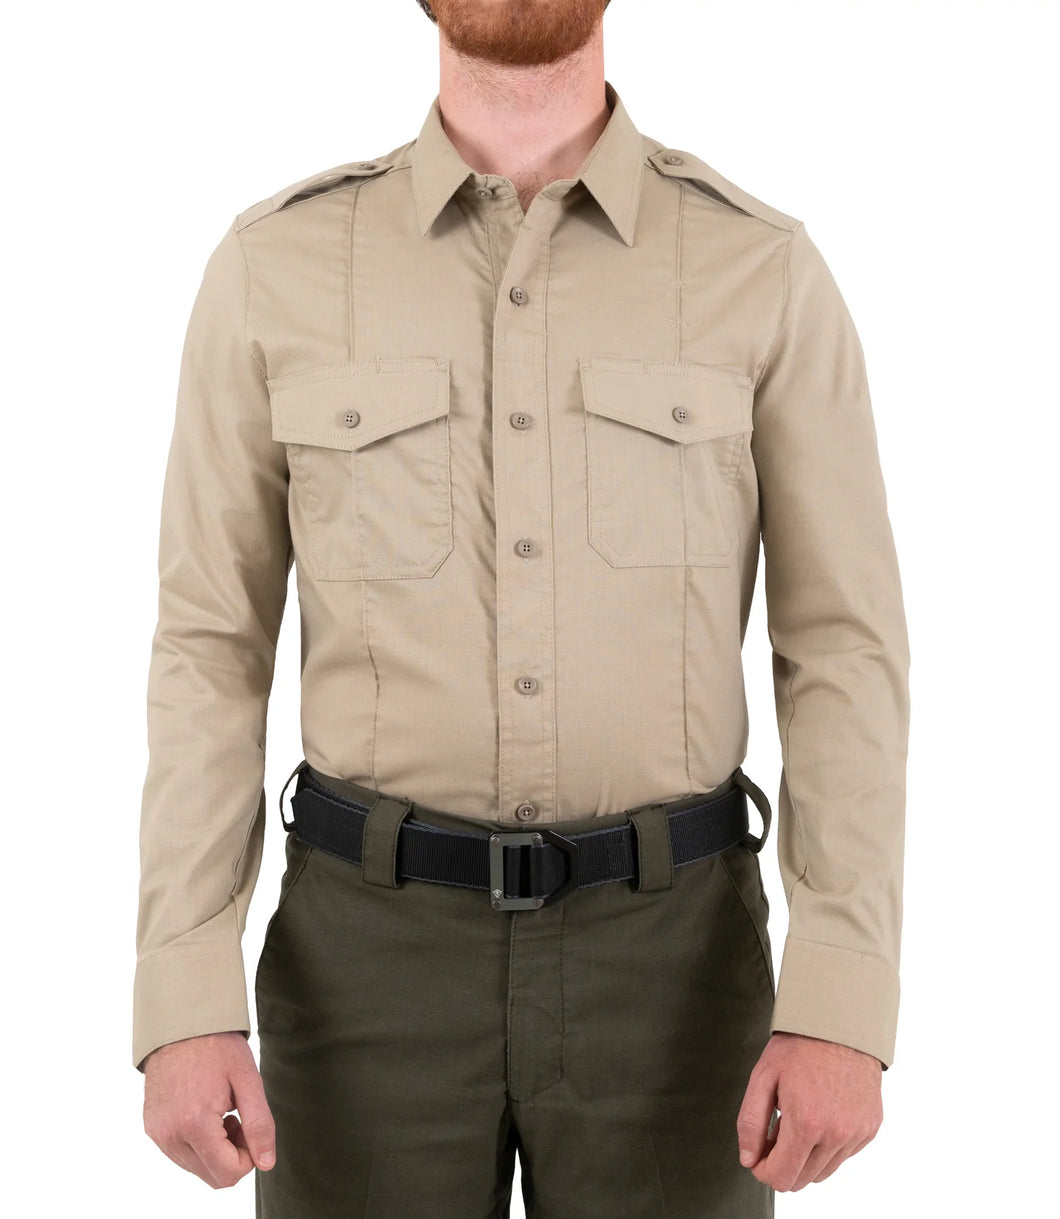 (111011) Men's Pro Duty Uniform Long Sleeve Shirt